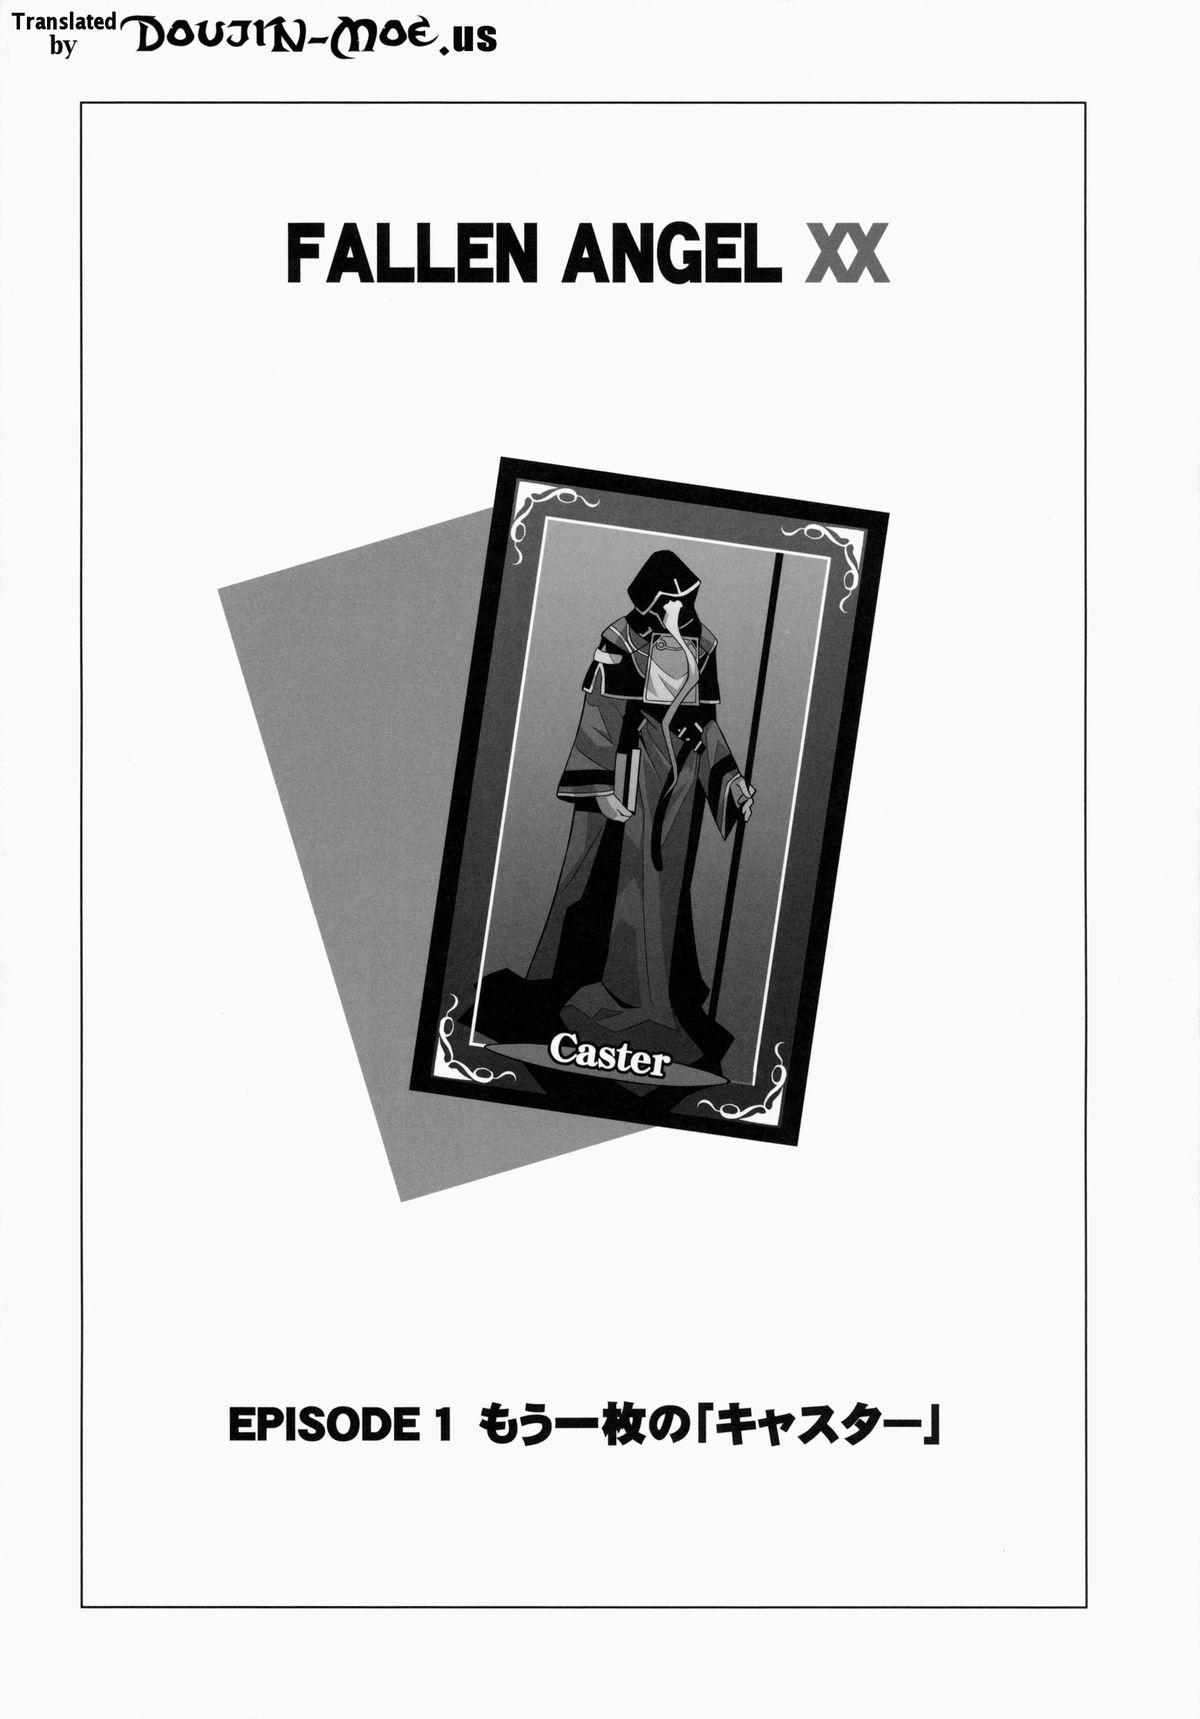 Datenshi XX EPISODE 1 | Fallen Angel XX EPISODE 1 3